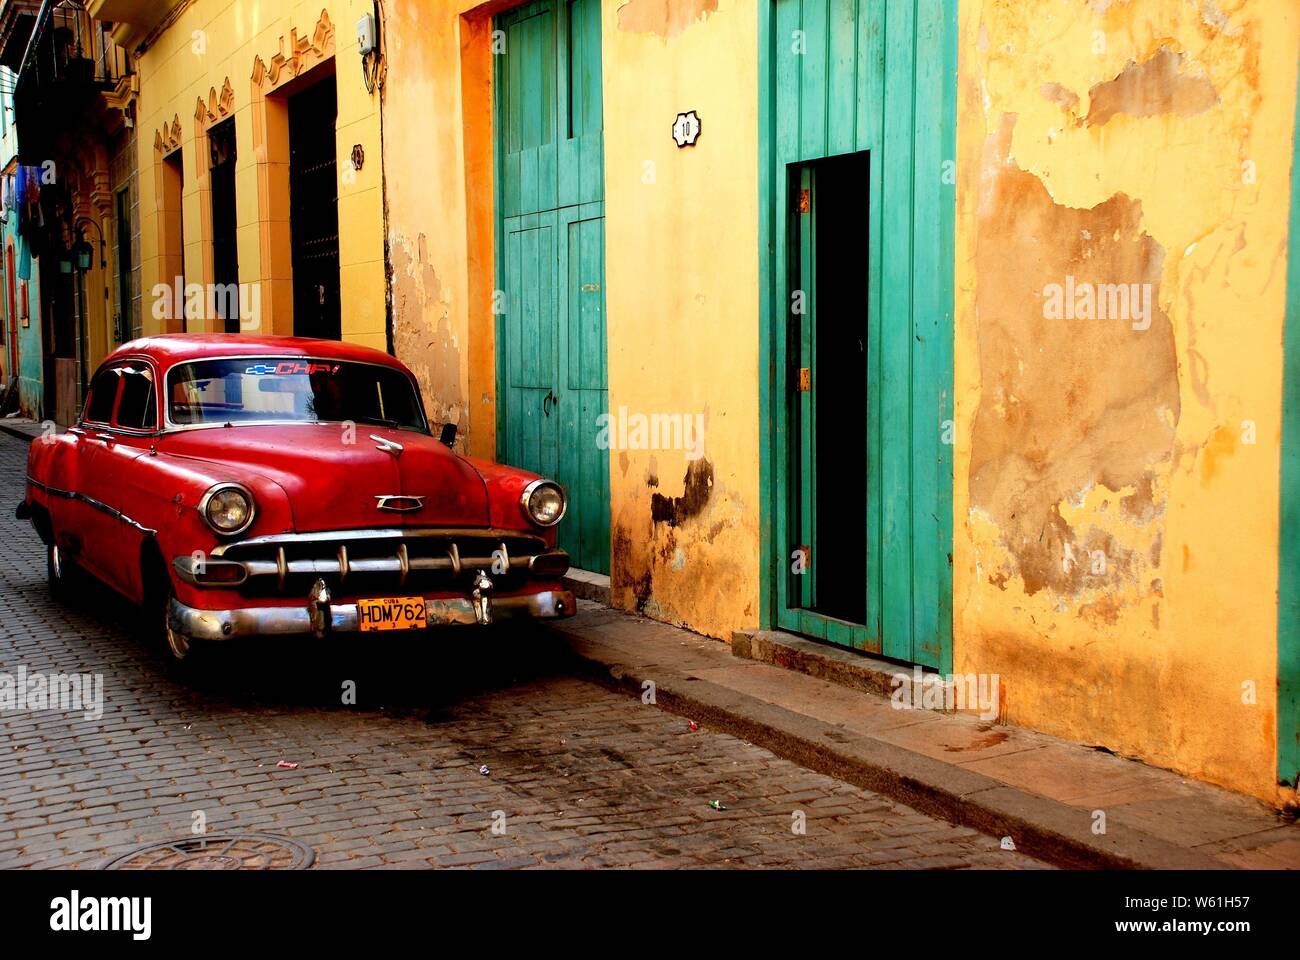 Classic Old red car in Havana, Cuba Stock Photo